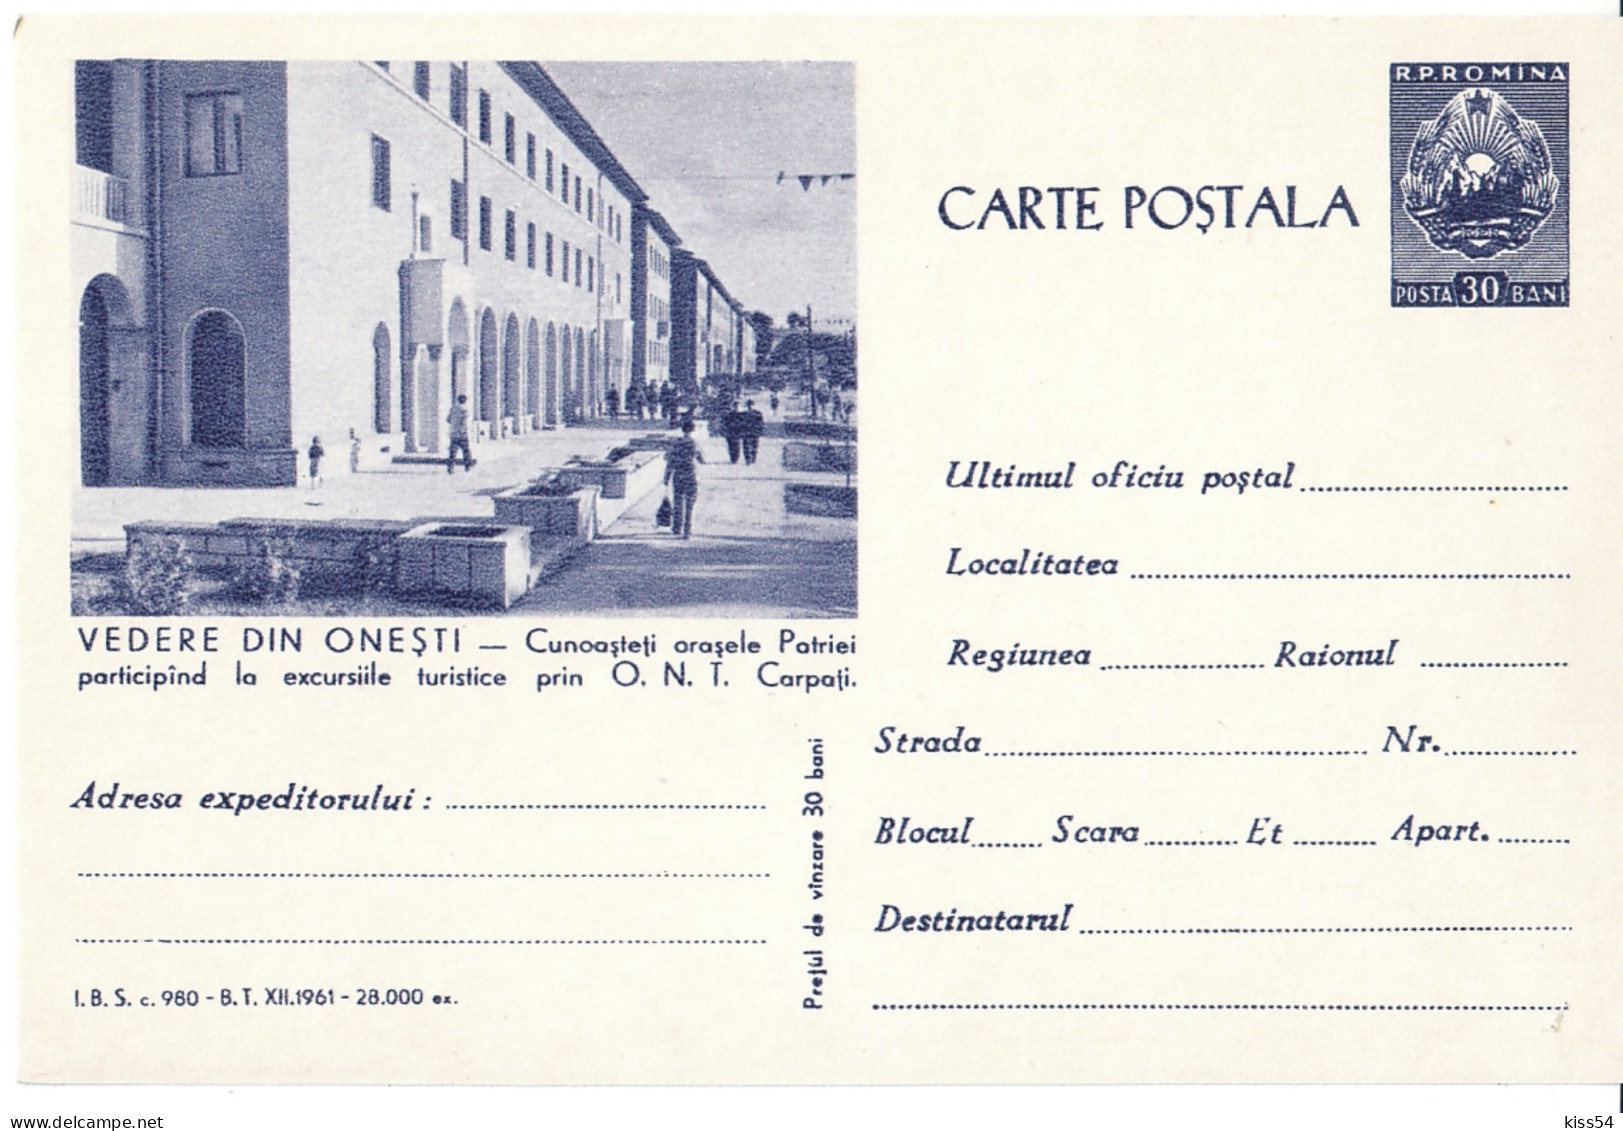 IP 61 C - 980l ONESTI, Weekly Tourist Excursions, Romania - Stationery - Unused - 1961 - Postal Stationery